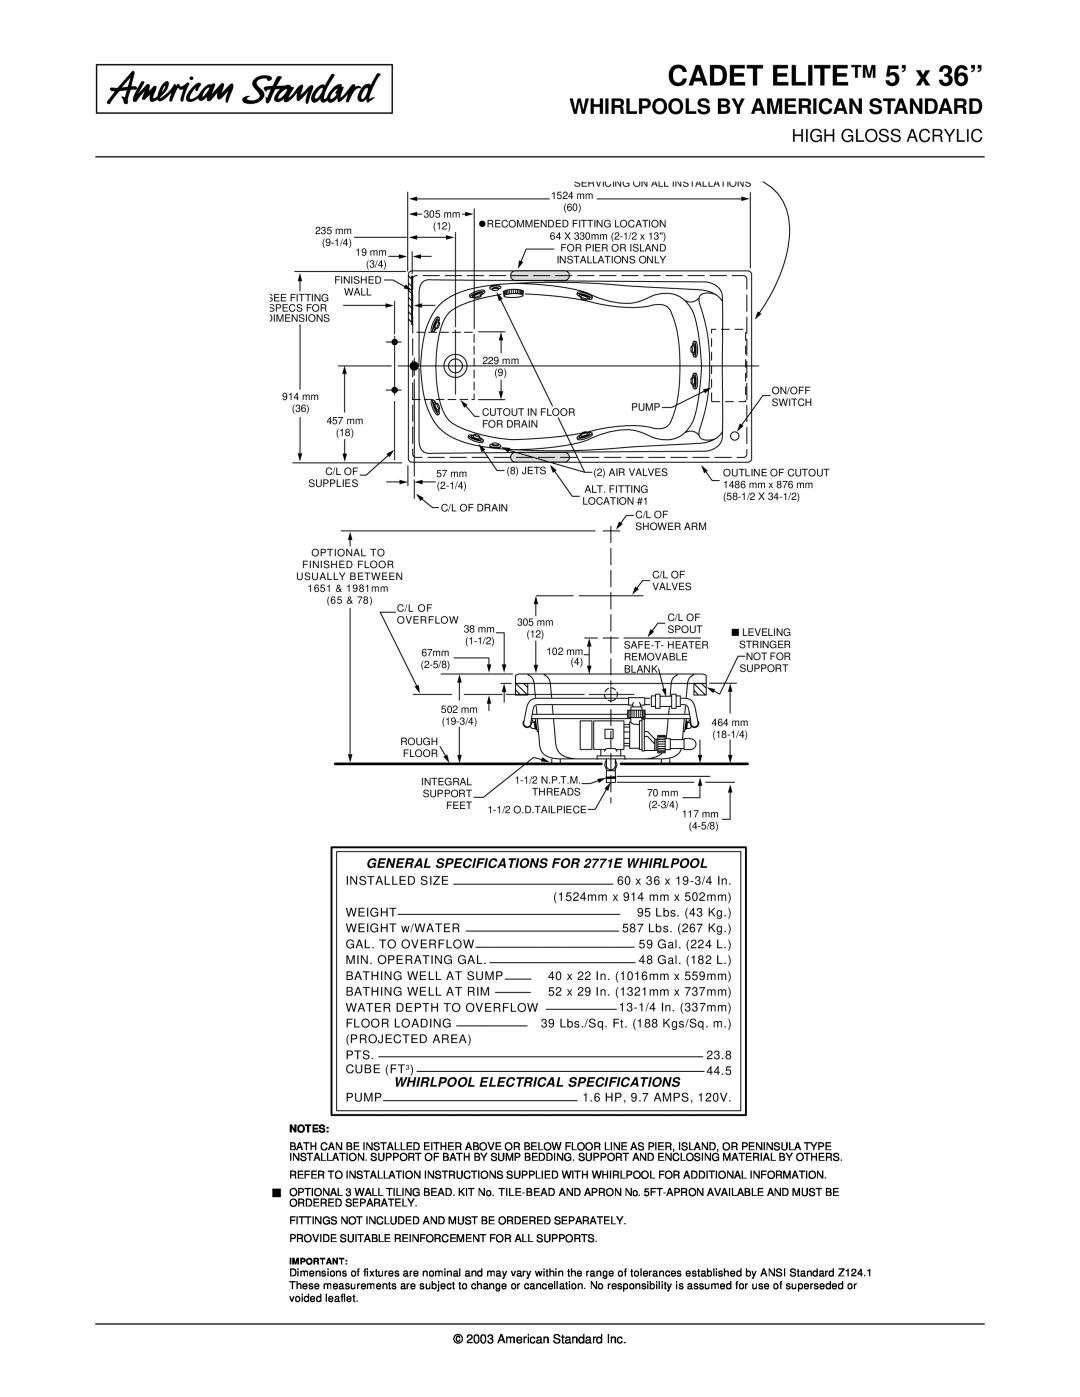 American Standard 2771EC CADET ELITE 5’ x 36”, Whirlpools By American Standard, Whirlpool Electrical Specifications 